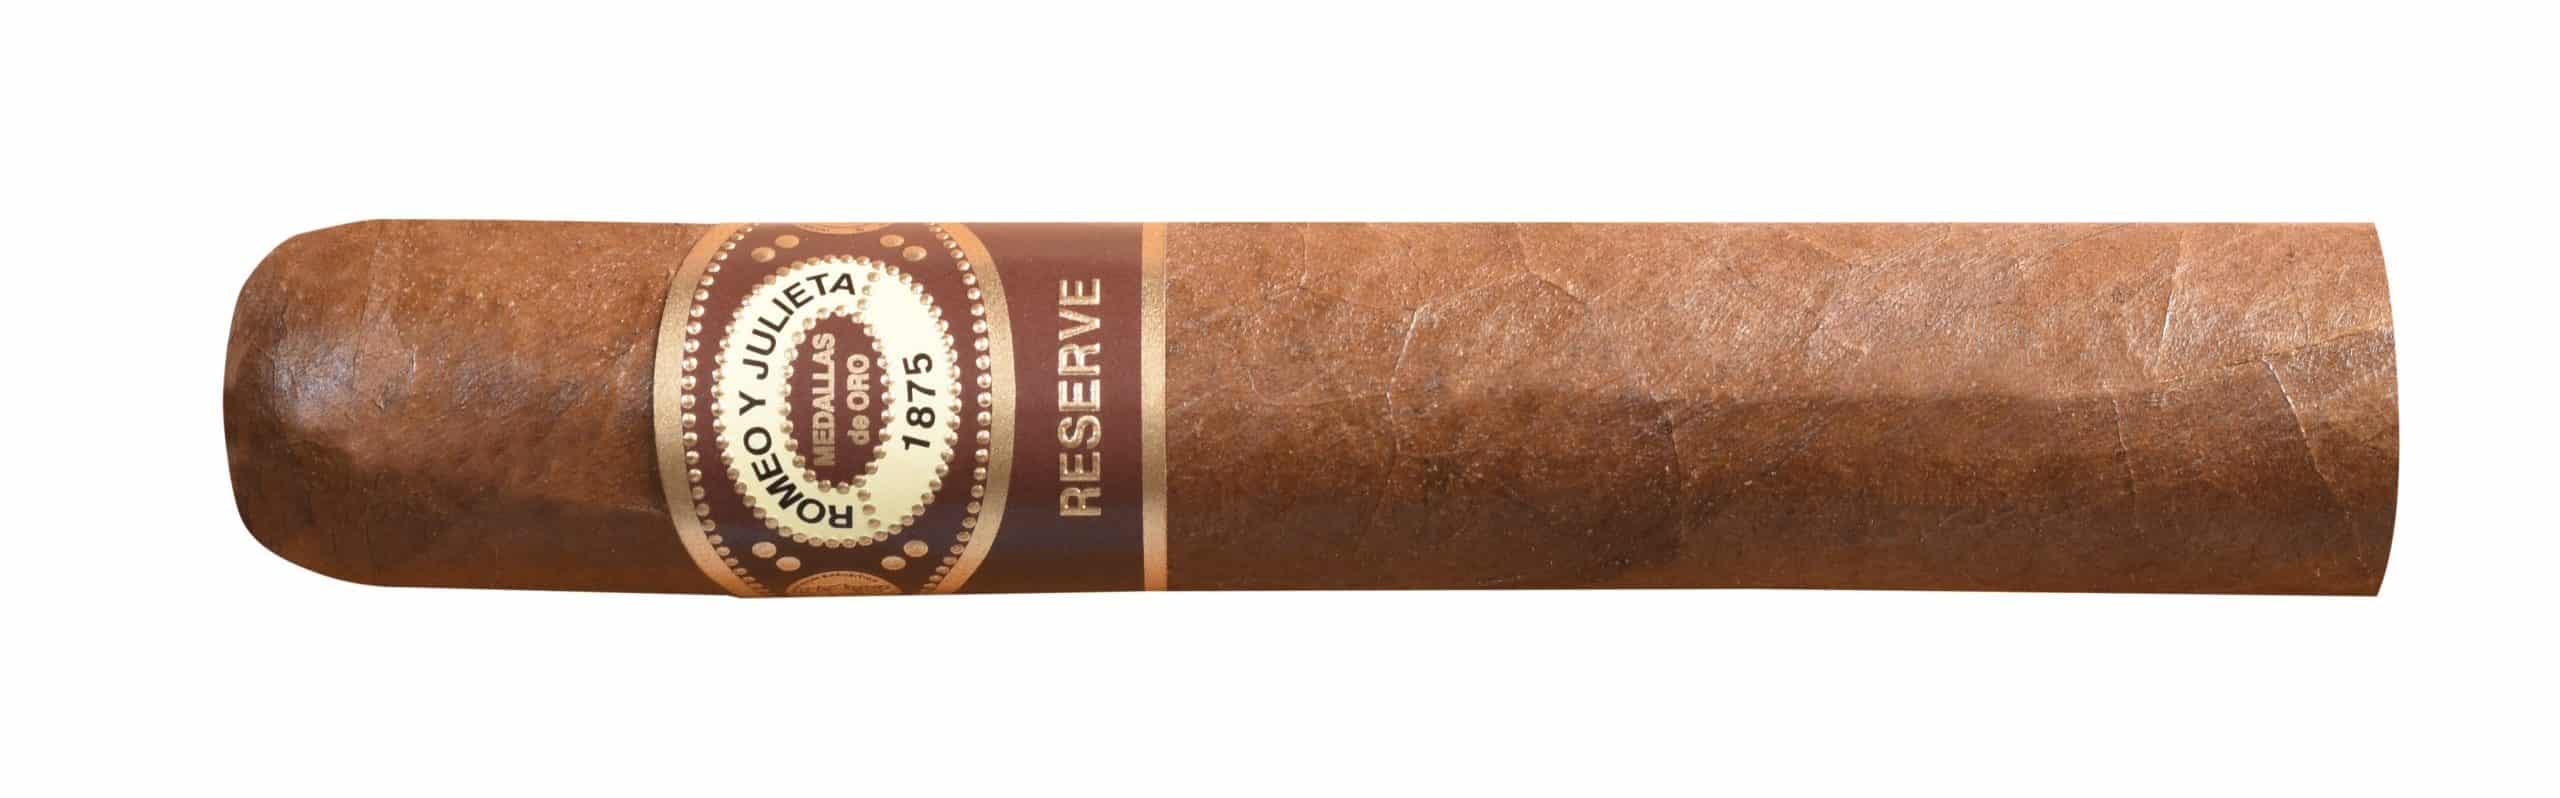 romeo y julieta reserve toro single cigar